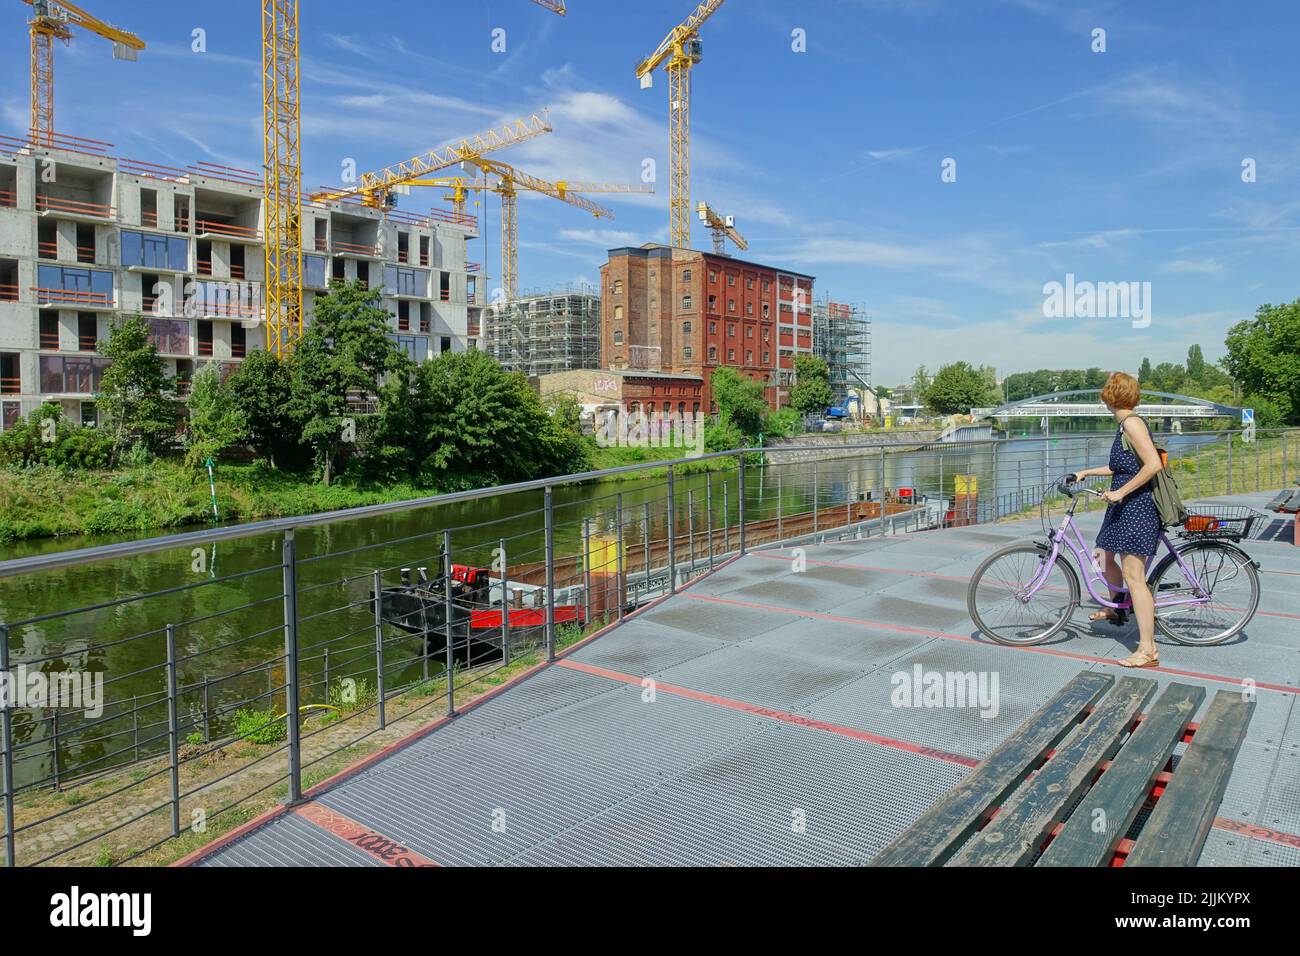 Berlin, Stadtwicklung am Nordhafen, 2018 // Berlin, City Development at Nordhafen, 2018 Banque D'Images